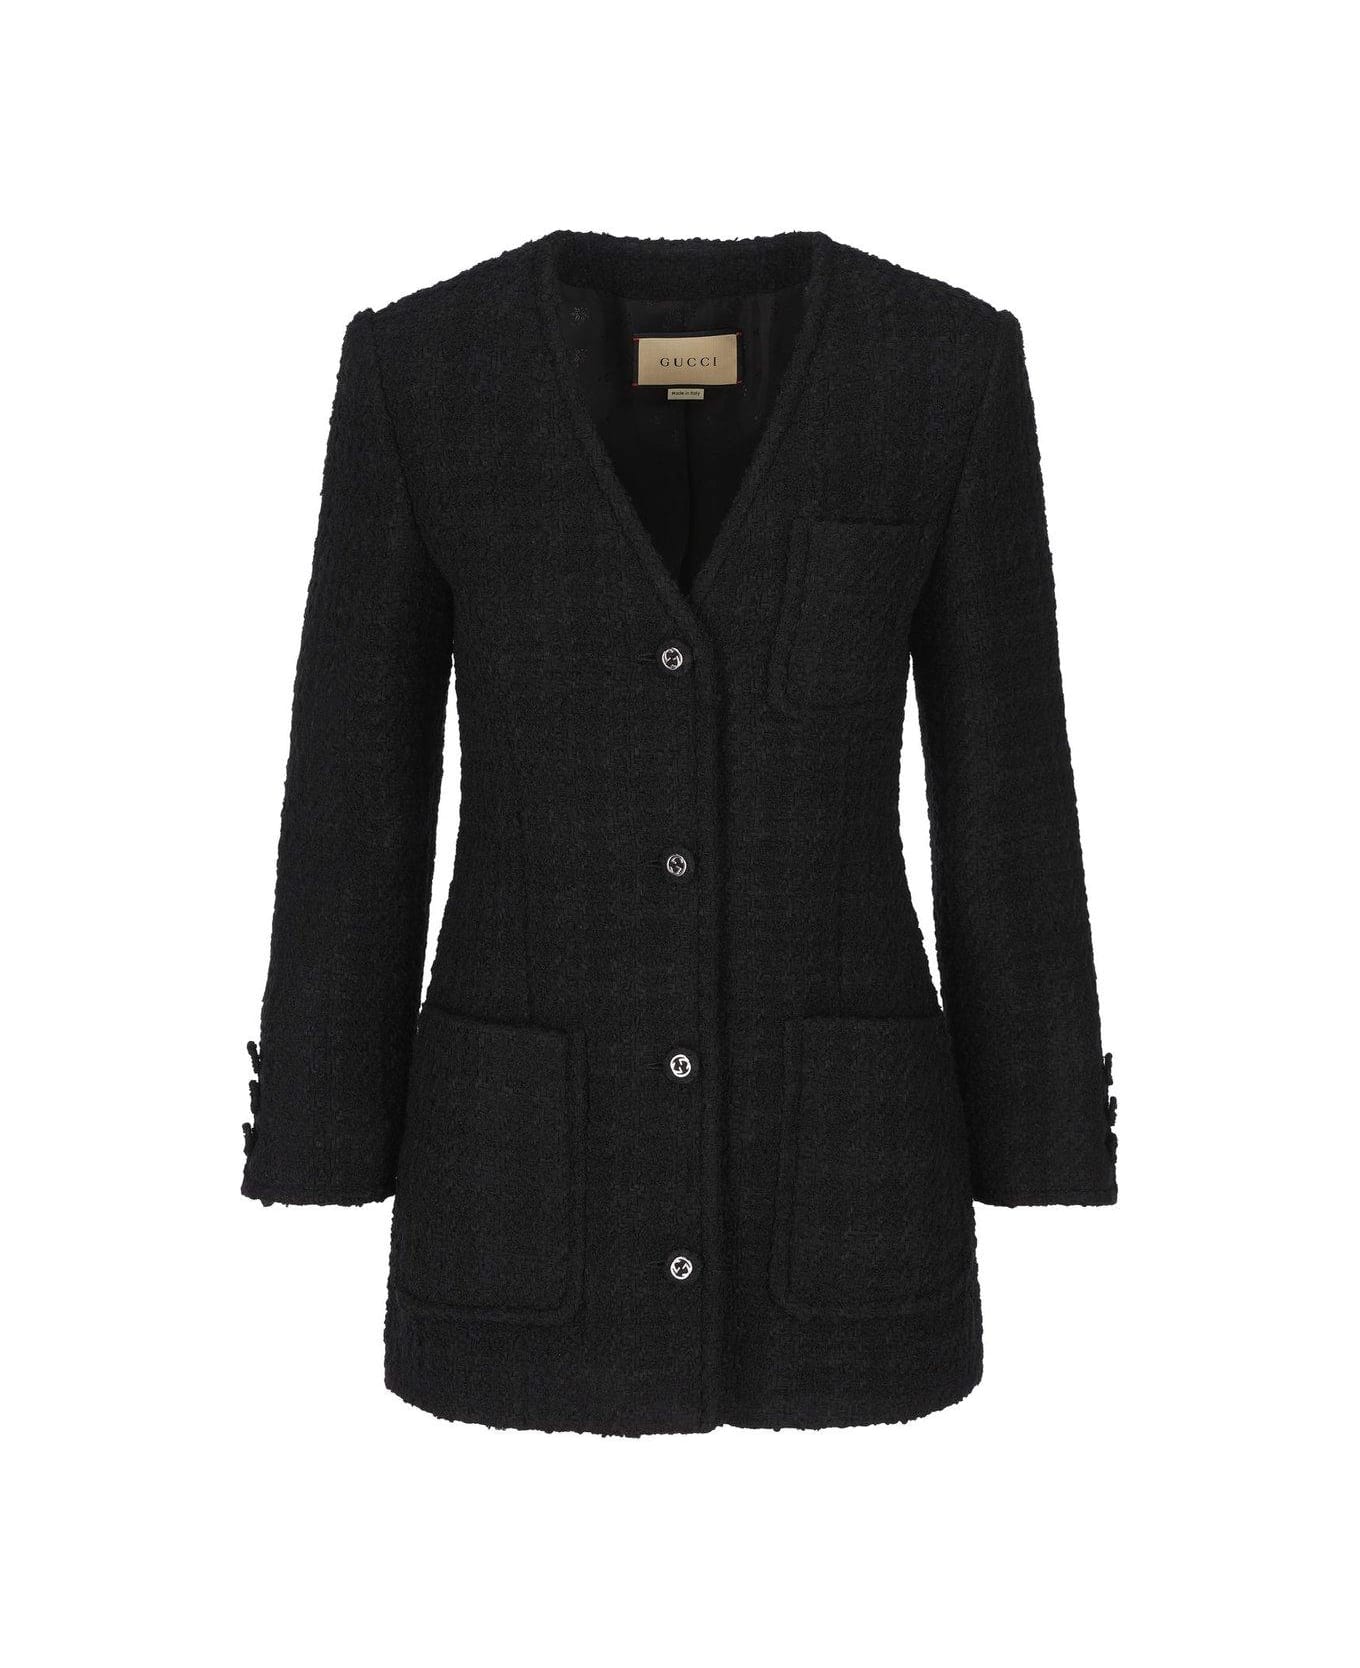 Gucci Single Breasted Tweed Jacket - Black